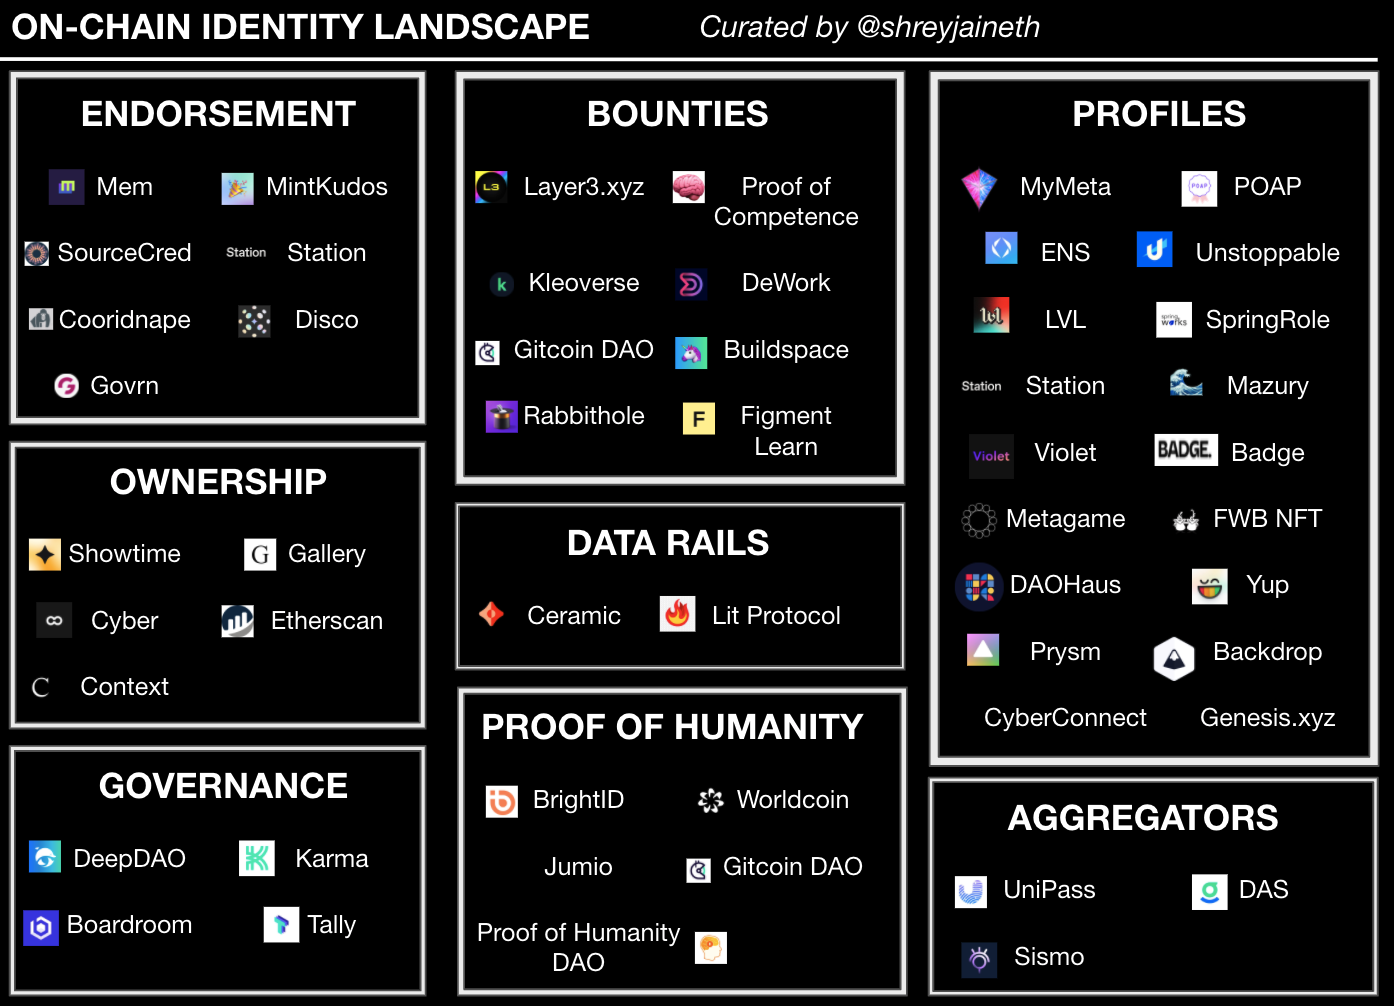 Image 1. On-chain identity landscape.